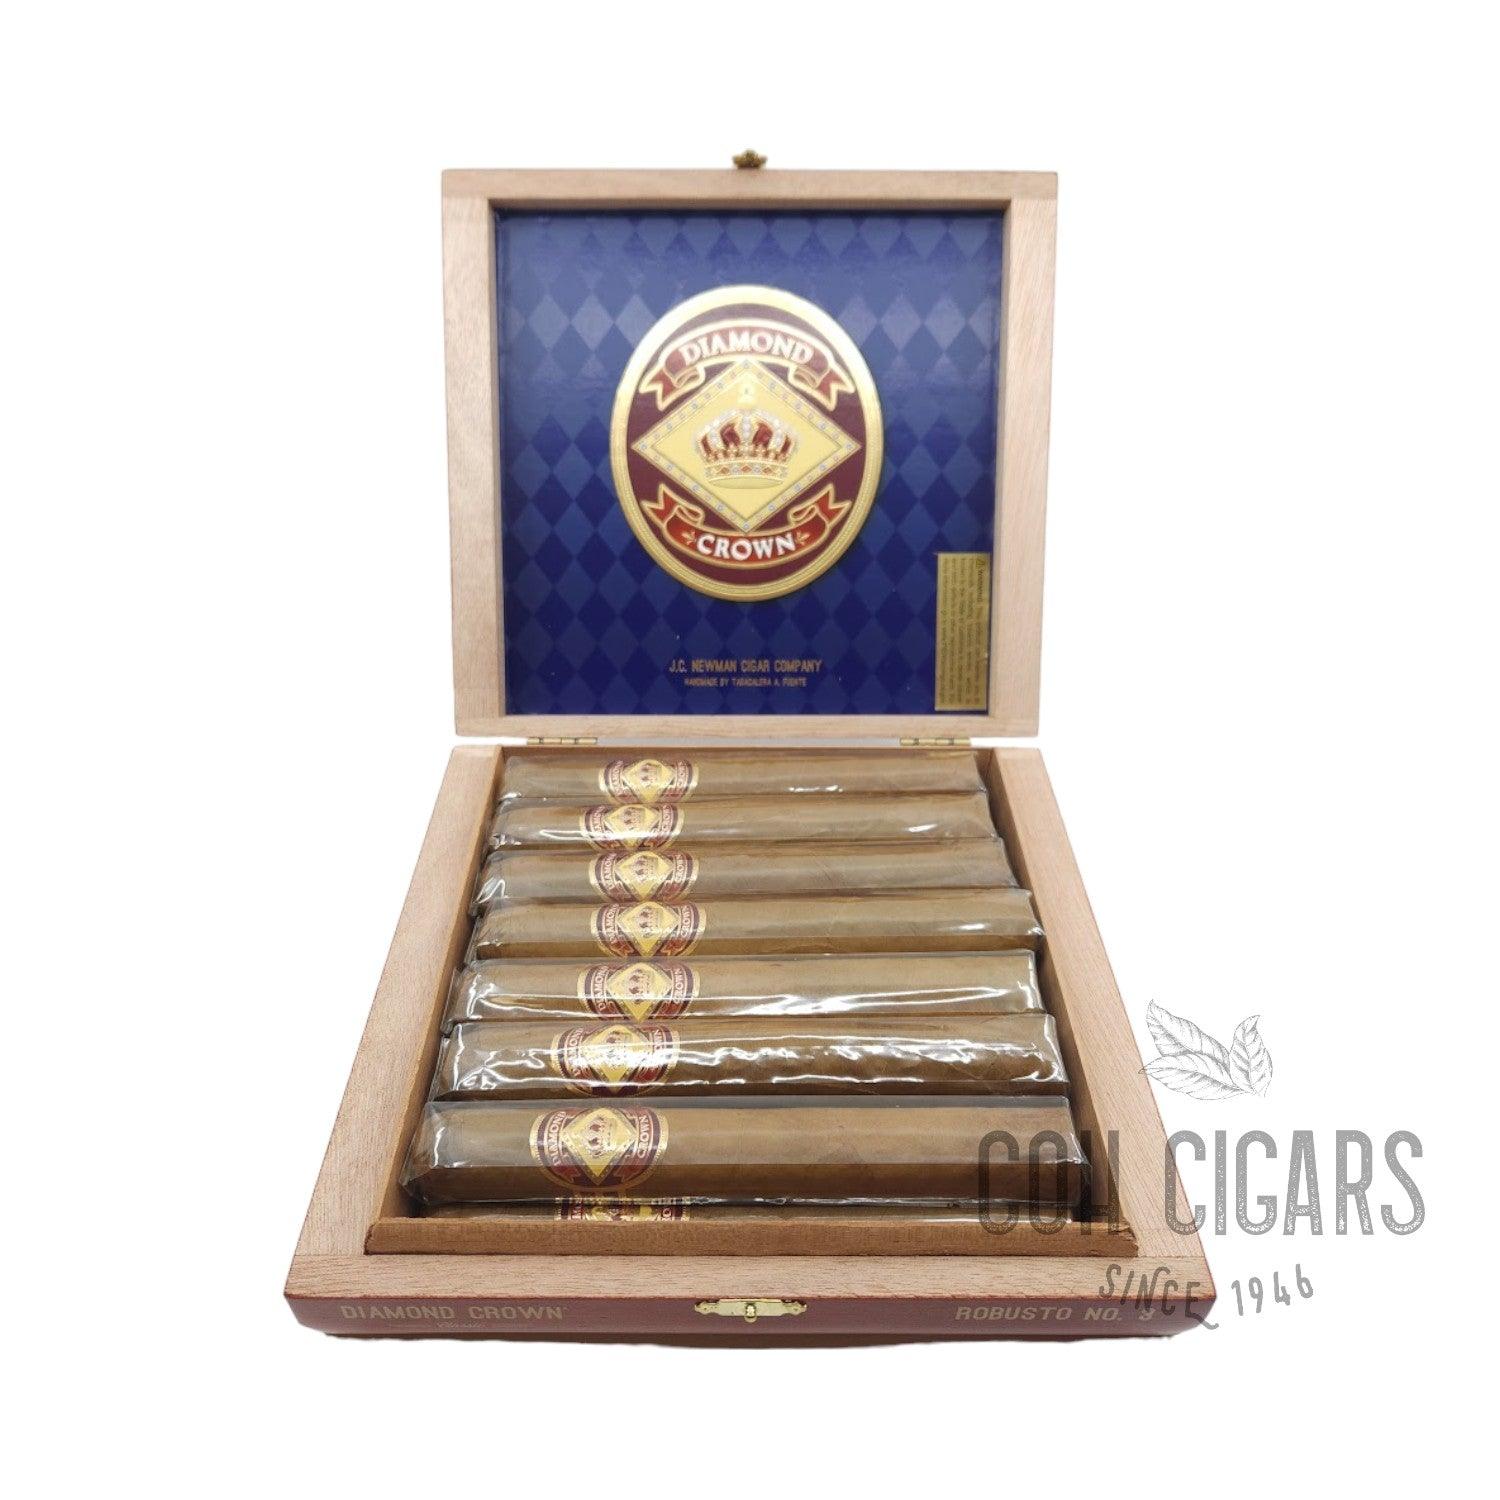 Diamond Crown Cigar | Robusto No.3 | Box 15 - hk.cohcigars